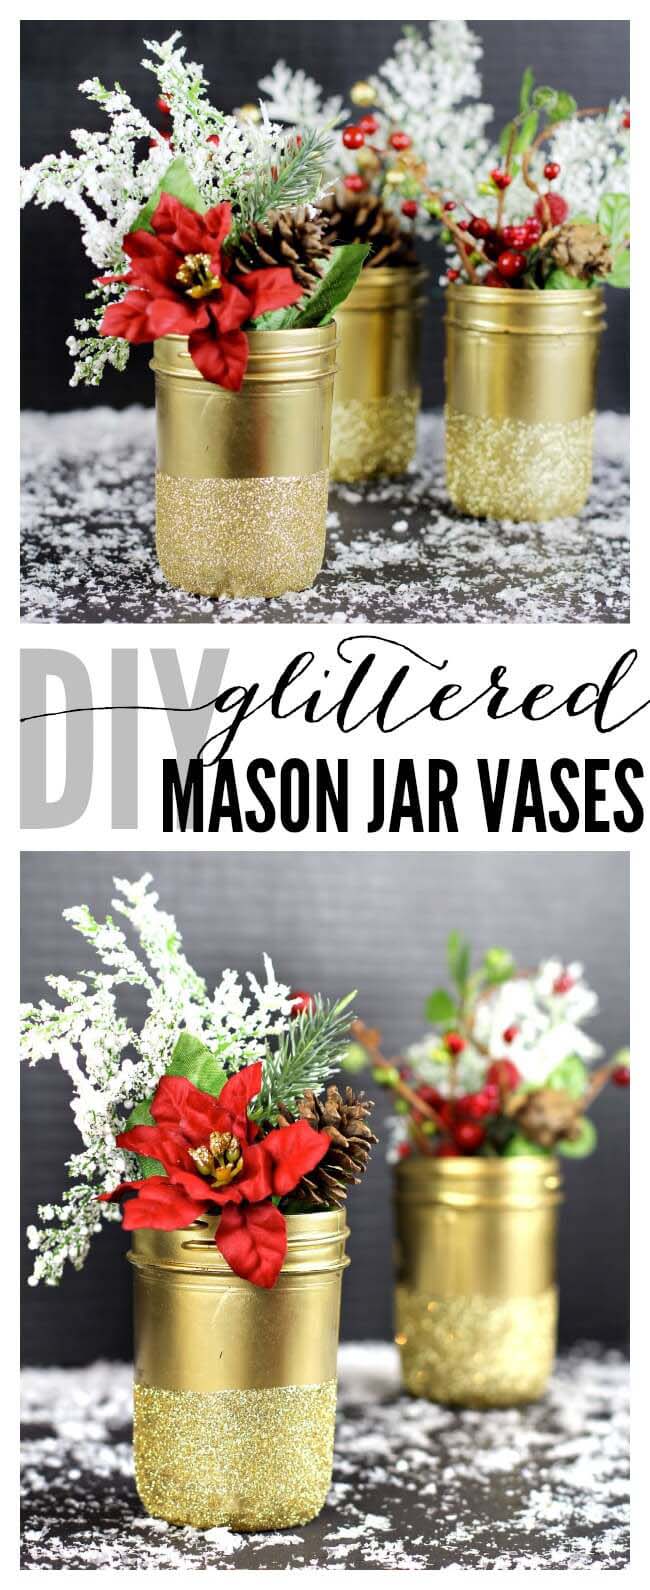 Gold Glittered Mason Jar Vases #Christmas #crafts #decorations #decorhomeideas